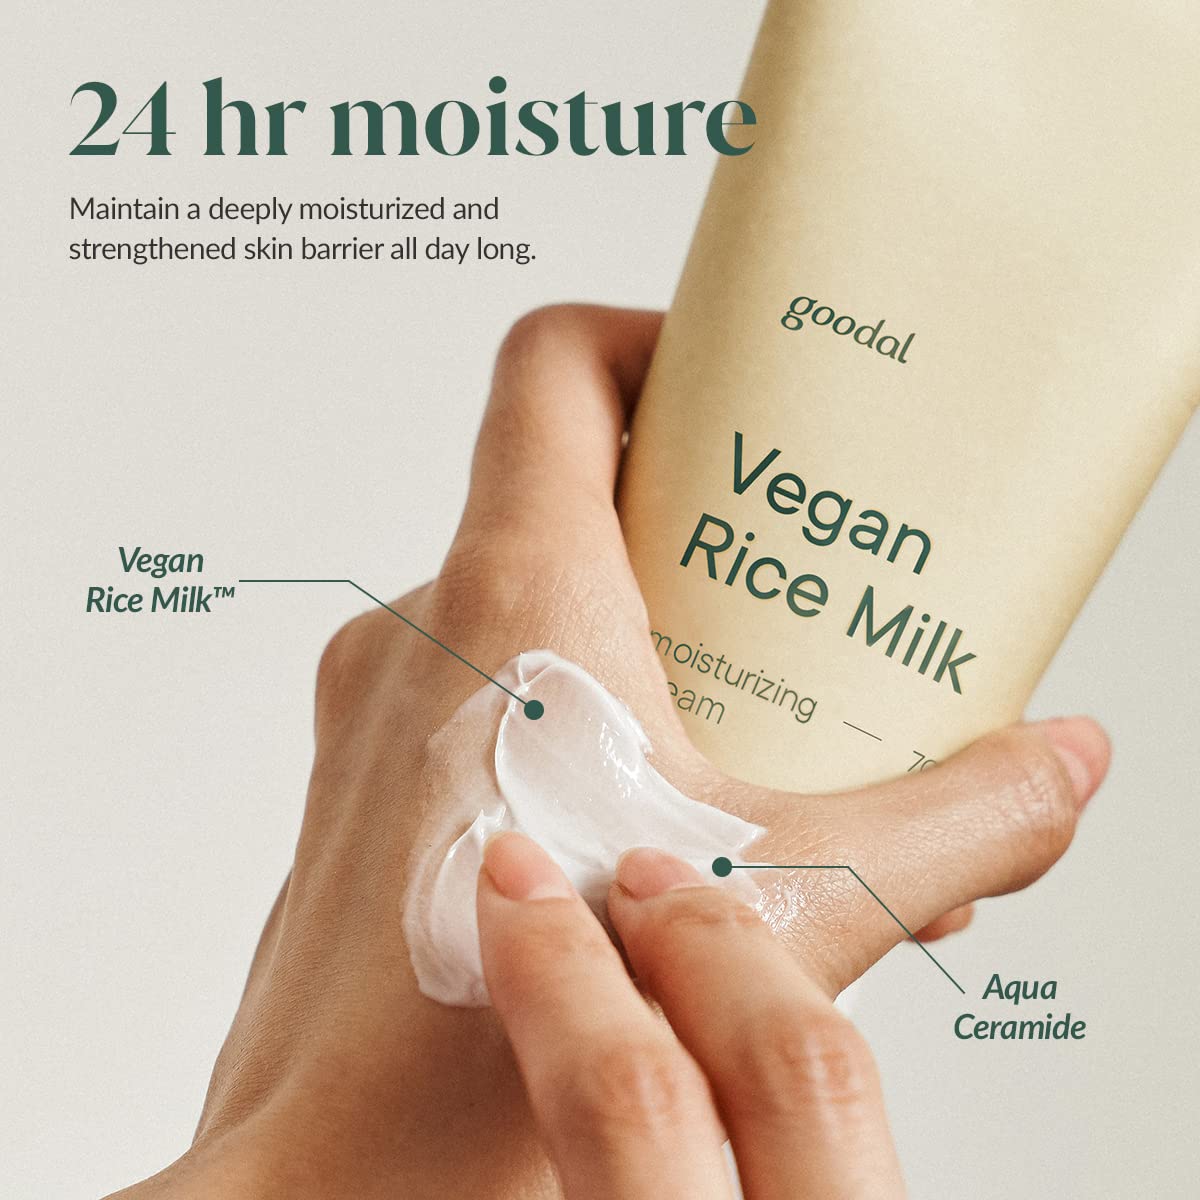 goodal Vegan Rice Milk Moisturizing Cream 70 ml / 2.36 fl. oz